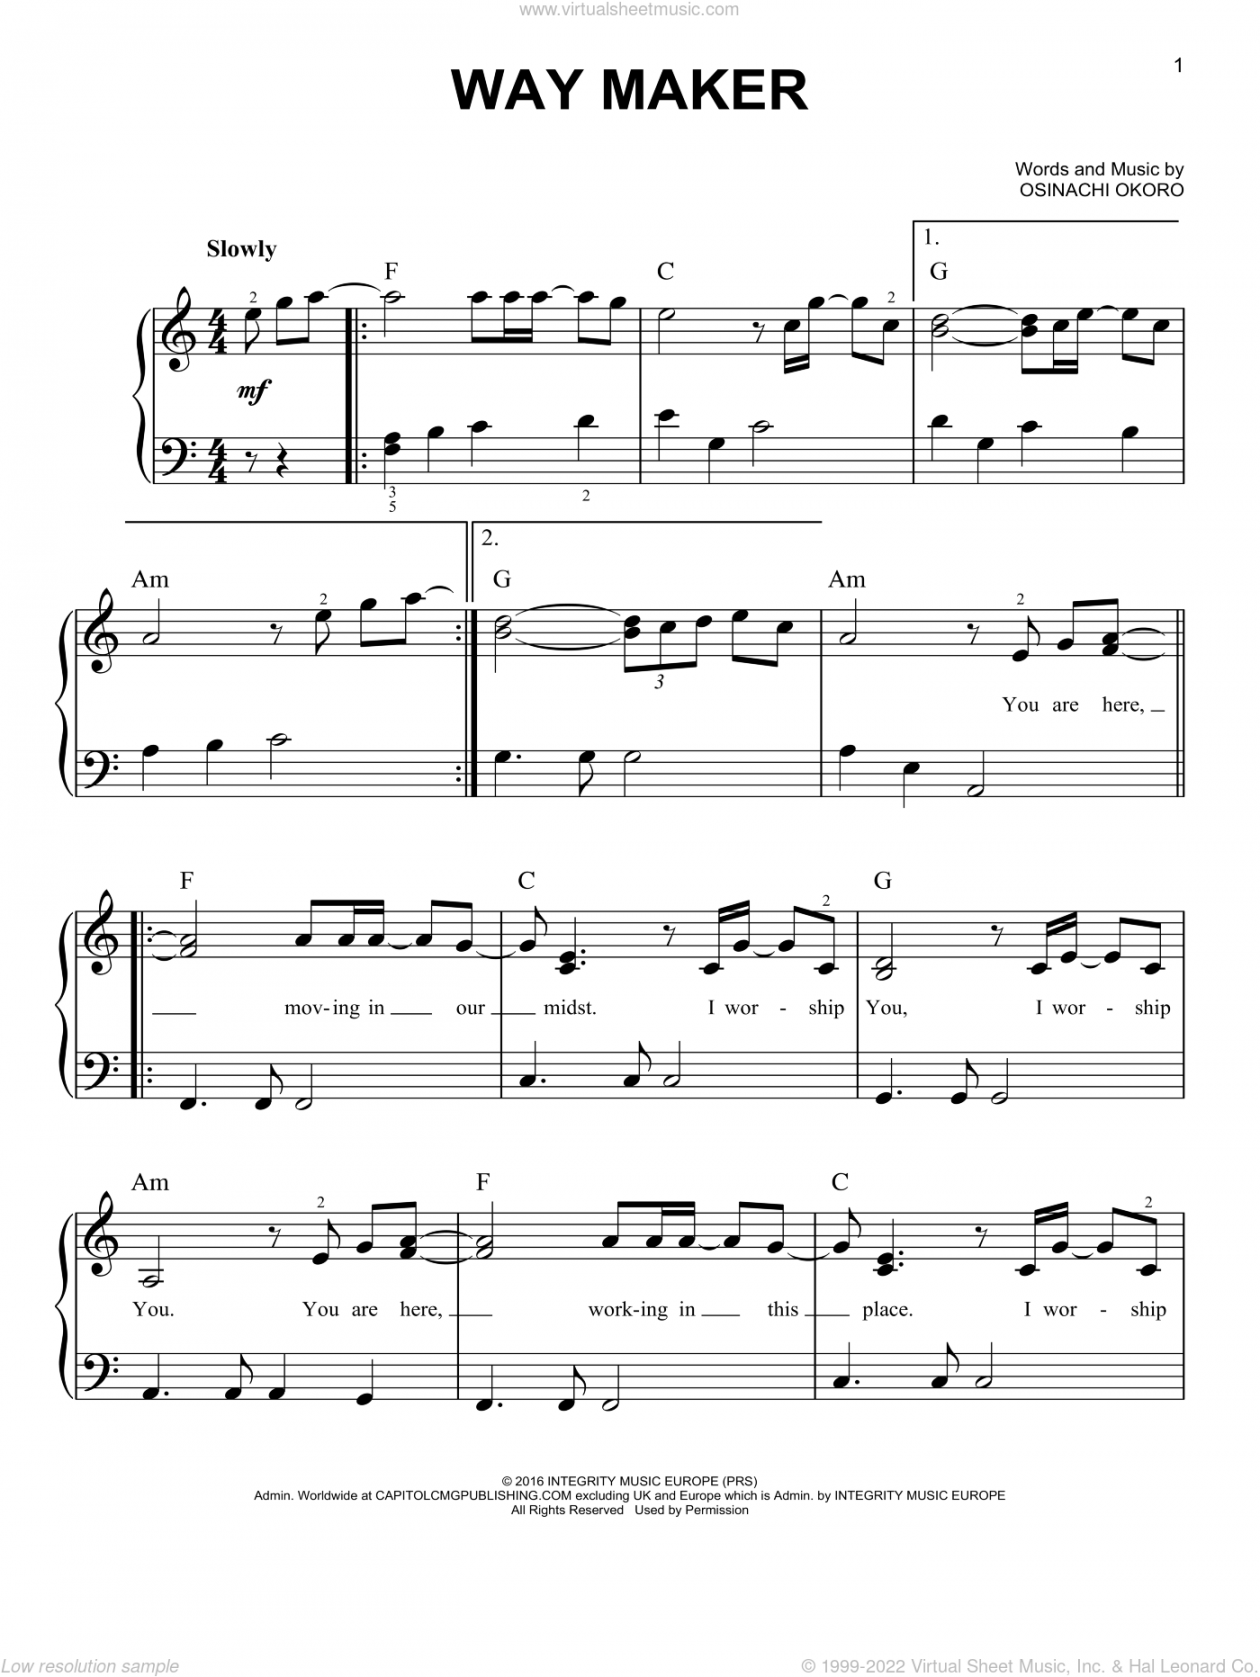 Free Printable Sheet Music With Lyrics - Printable - Way Maker sheet music for piano solo (PDF) v